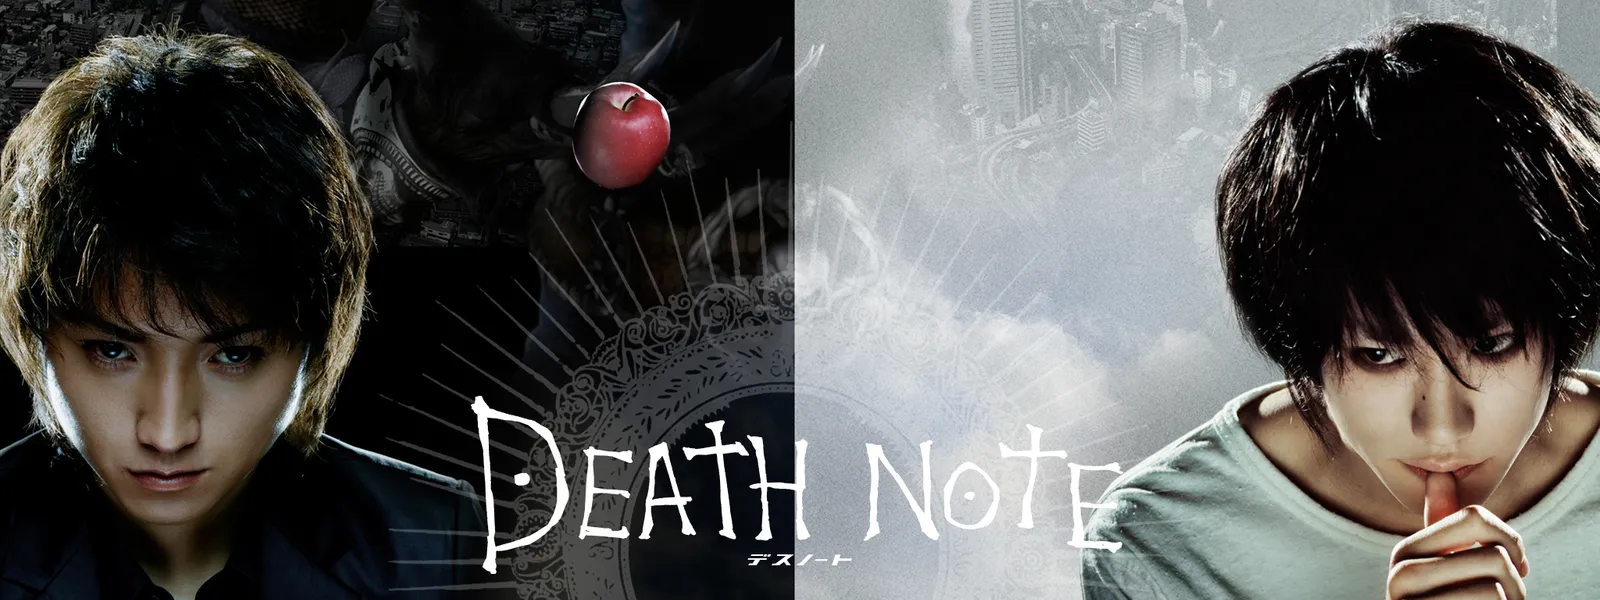 Death Note デスノート Movie が見放題 Hulu フールー お試し無料